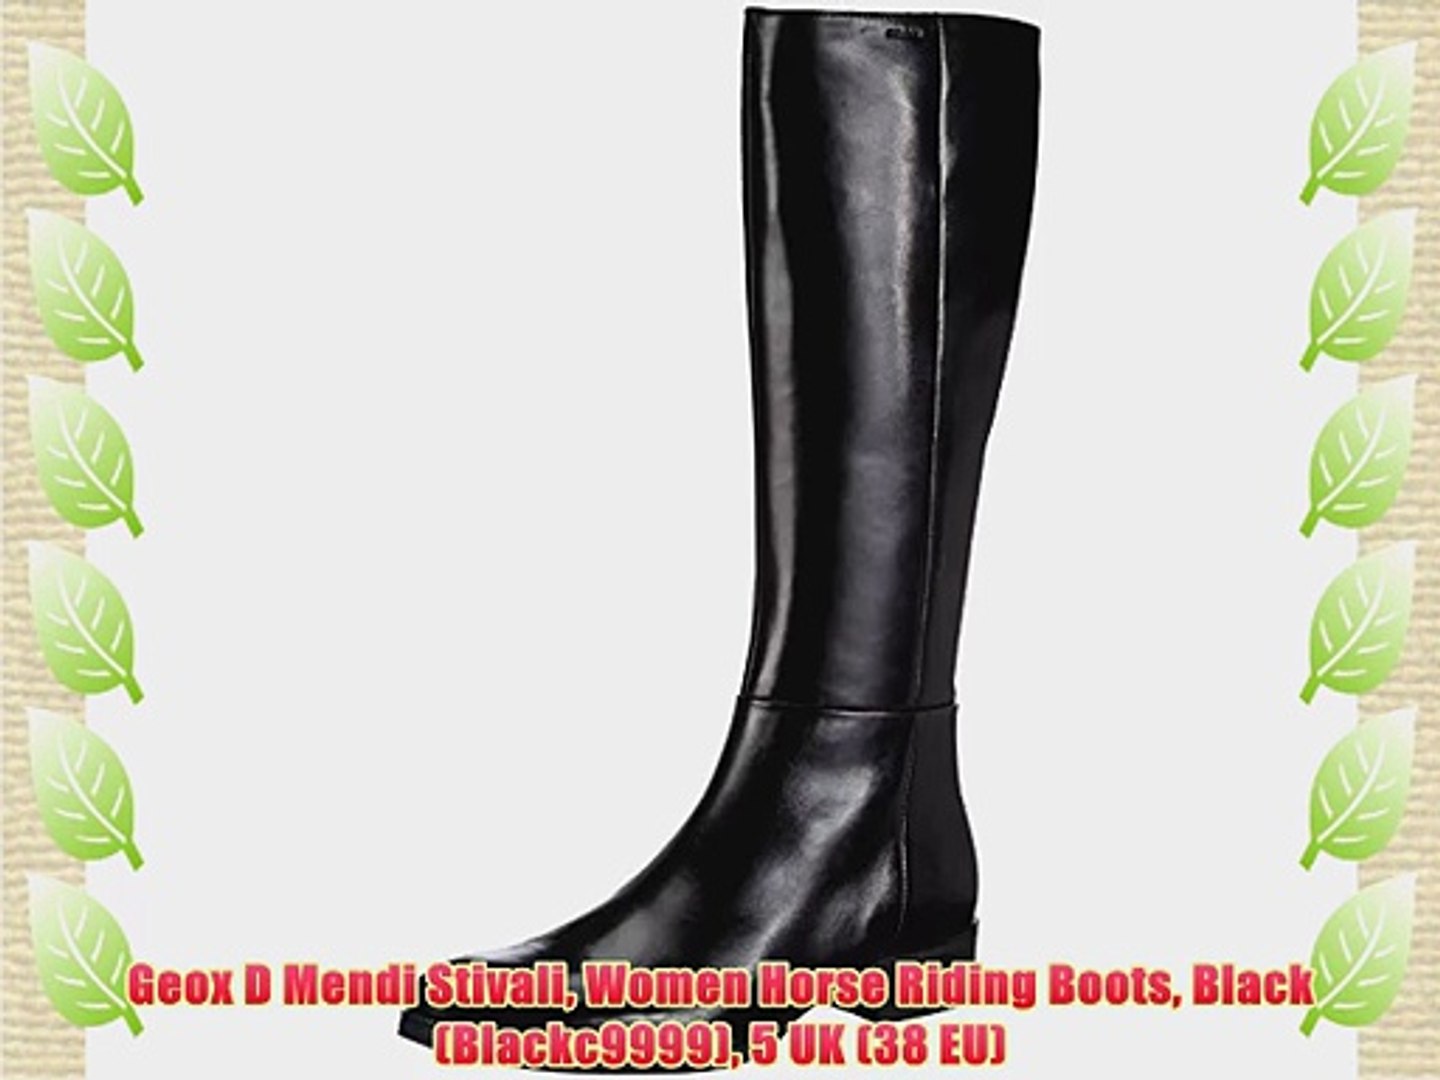 Geox D Mendi Stivali Women Horse Riding Boots Black (Blackc9999) 5 UK (38  EU) - video Dailymotion